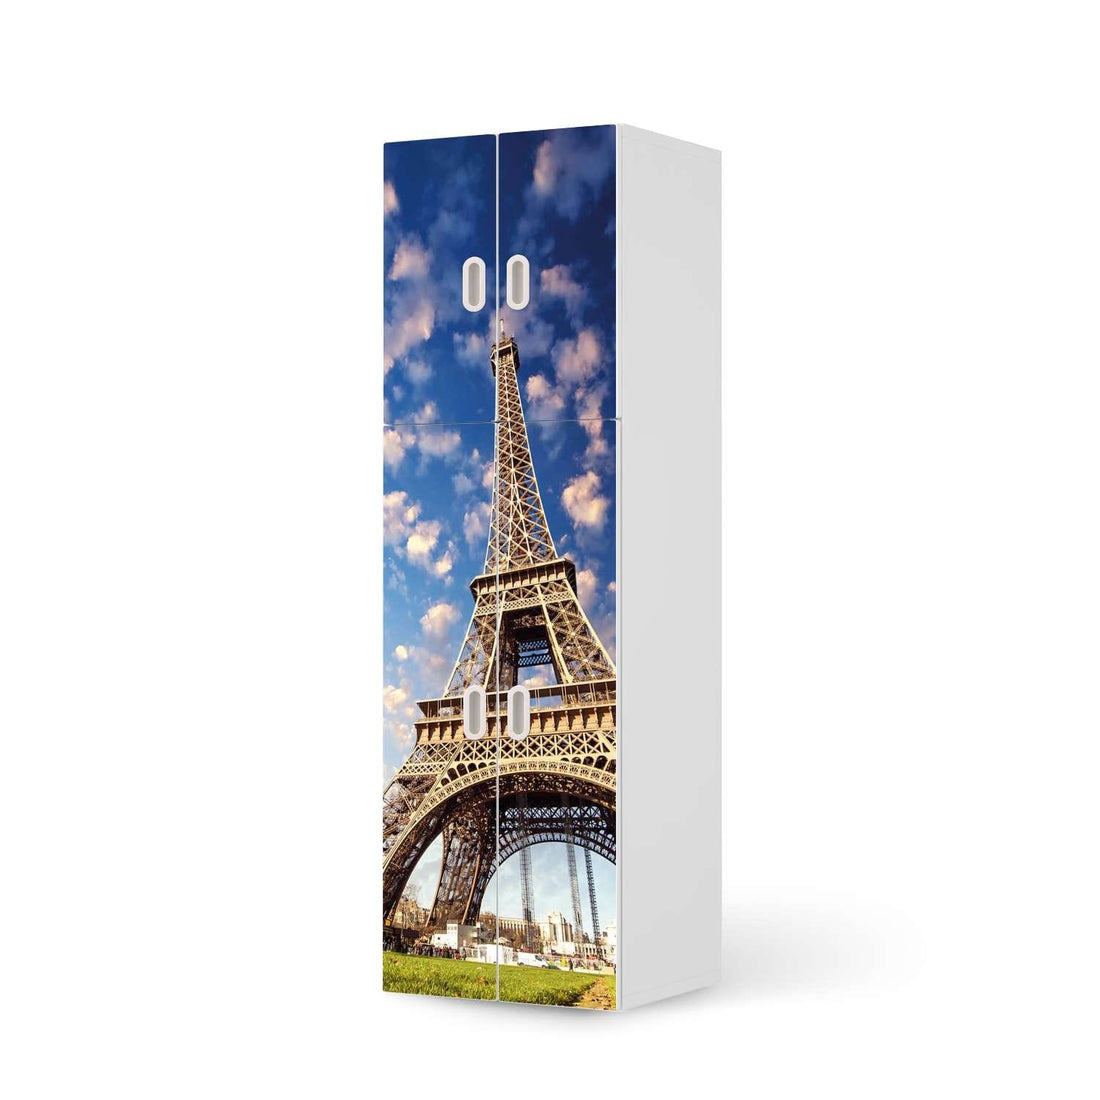 Selbstklebende Folie La Tour Eiffel - IKEA Stuva / Fritids kombiniert - 2 große Türen und 2 kleine Türen  - weiss